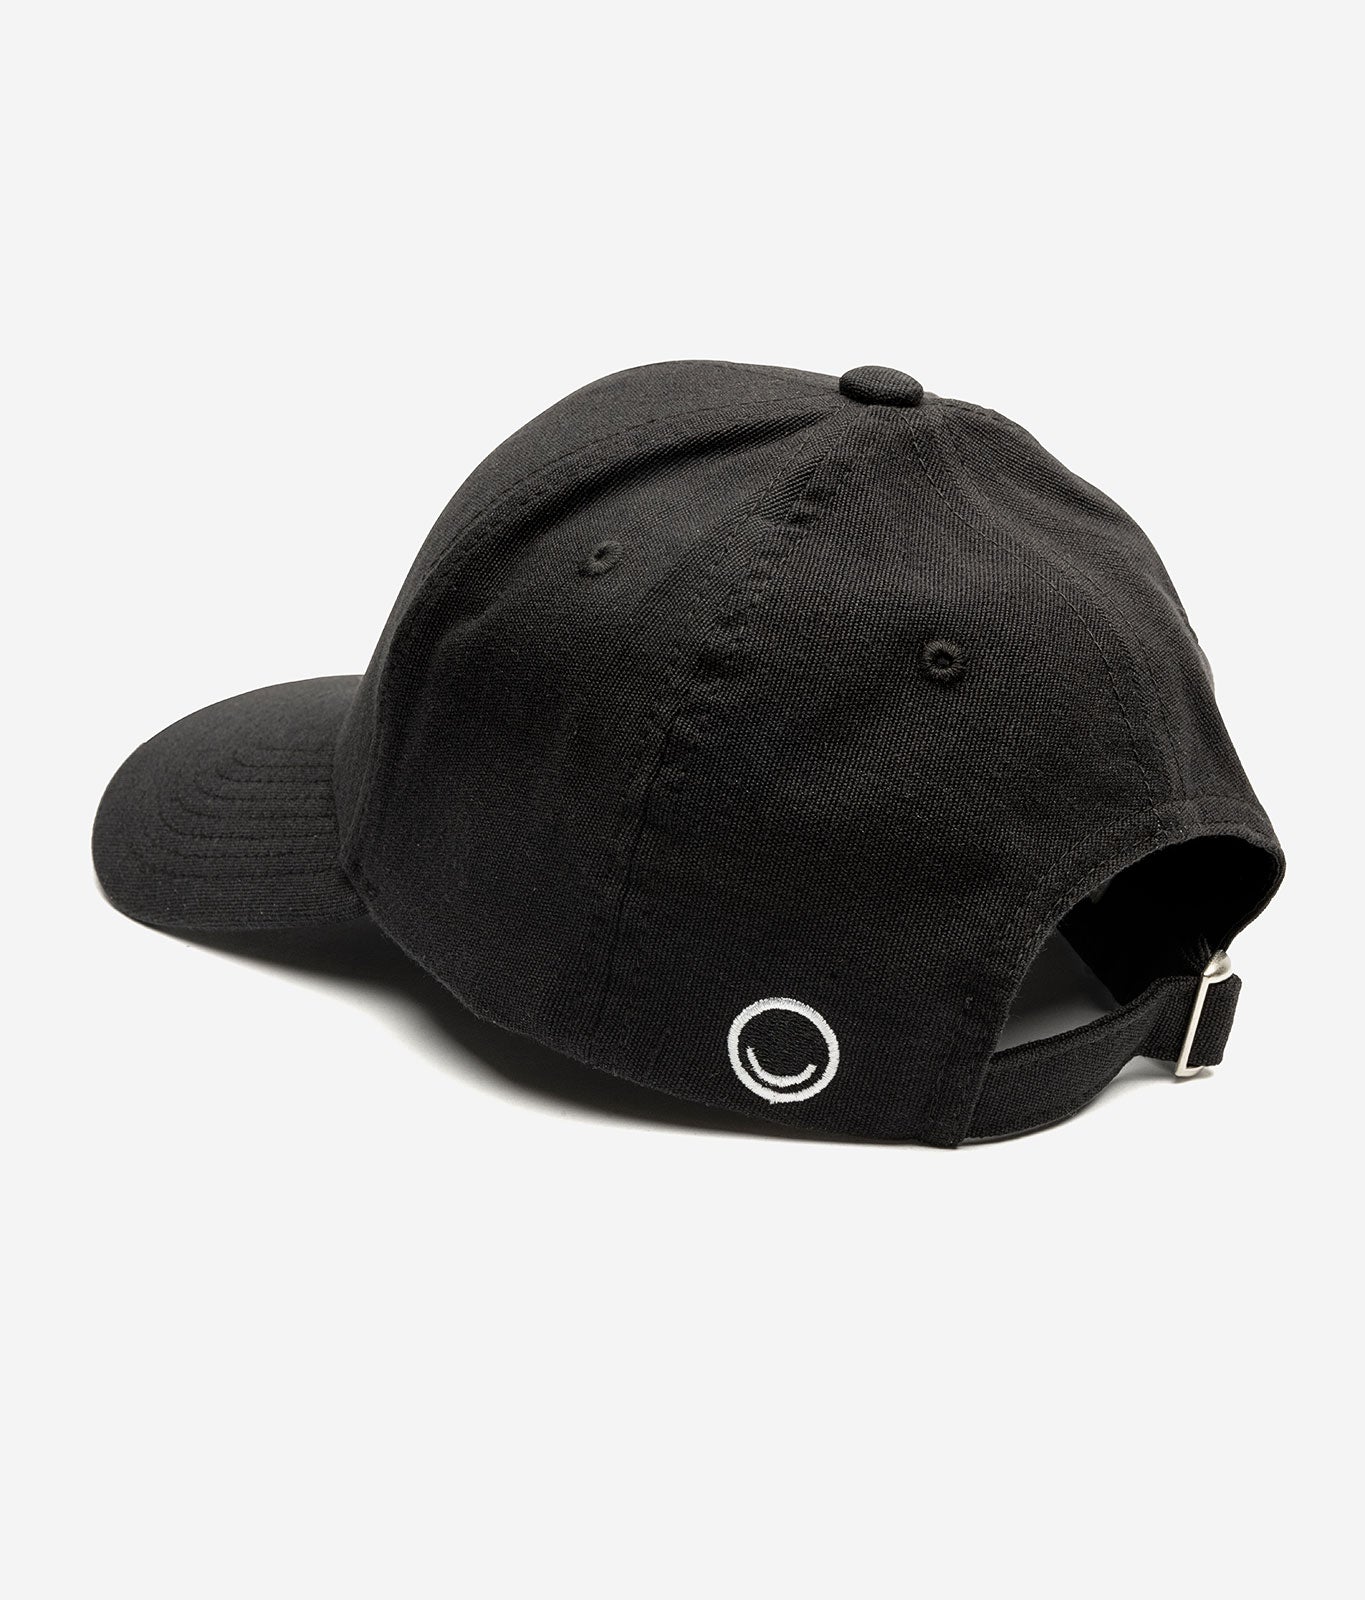 Stiksen │ 107 Uniform Black Baseball Cap